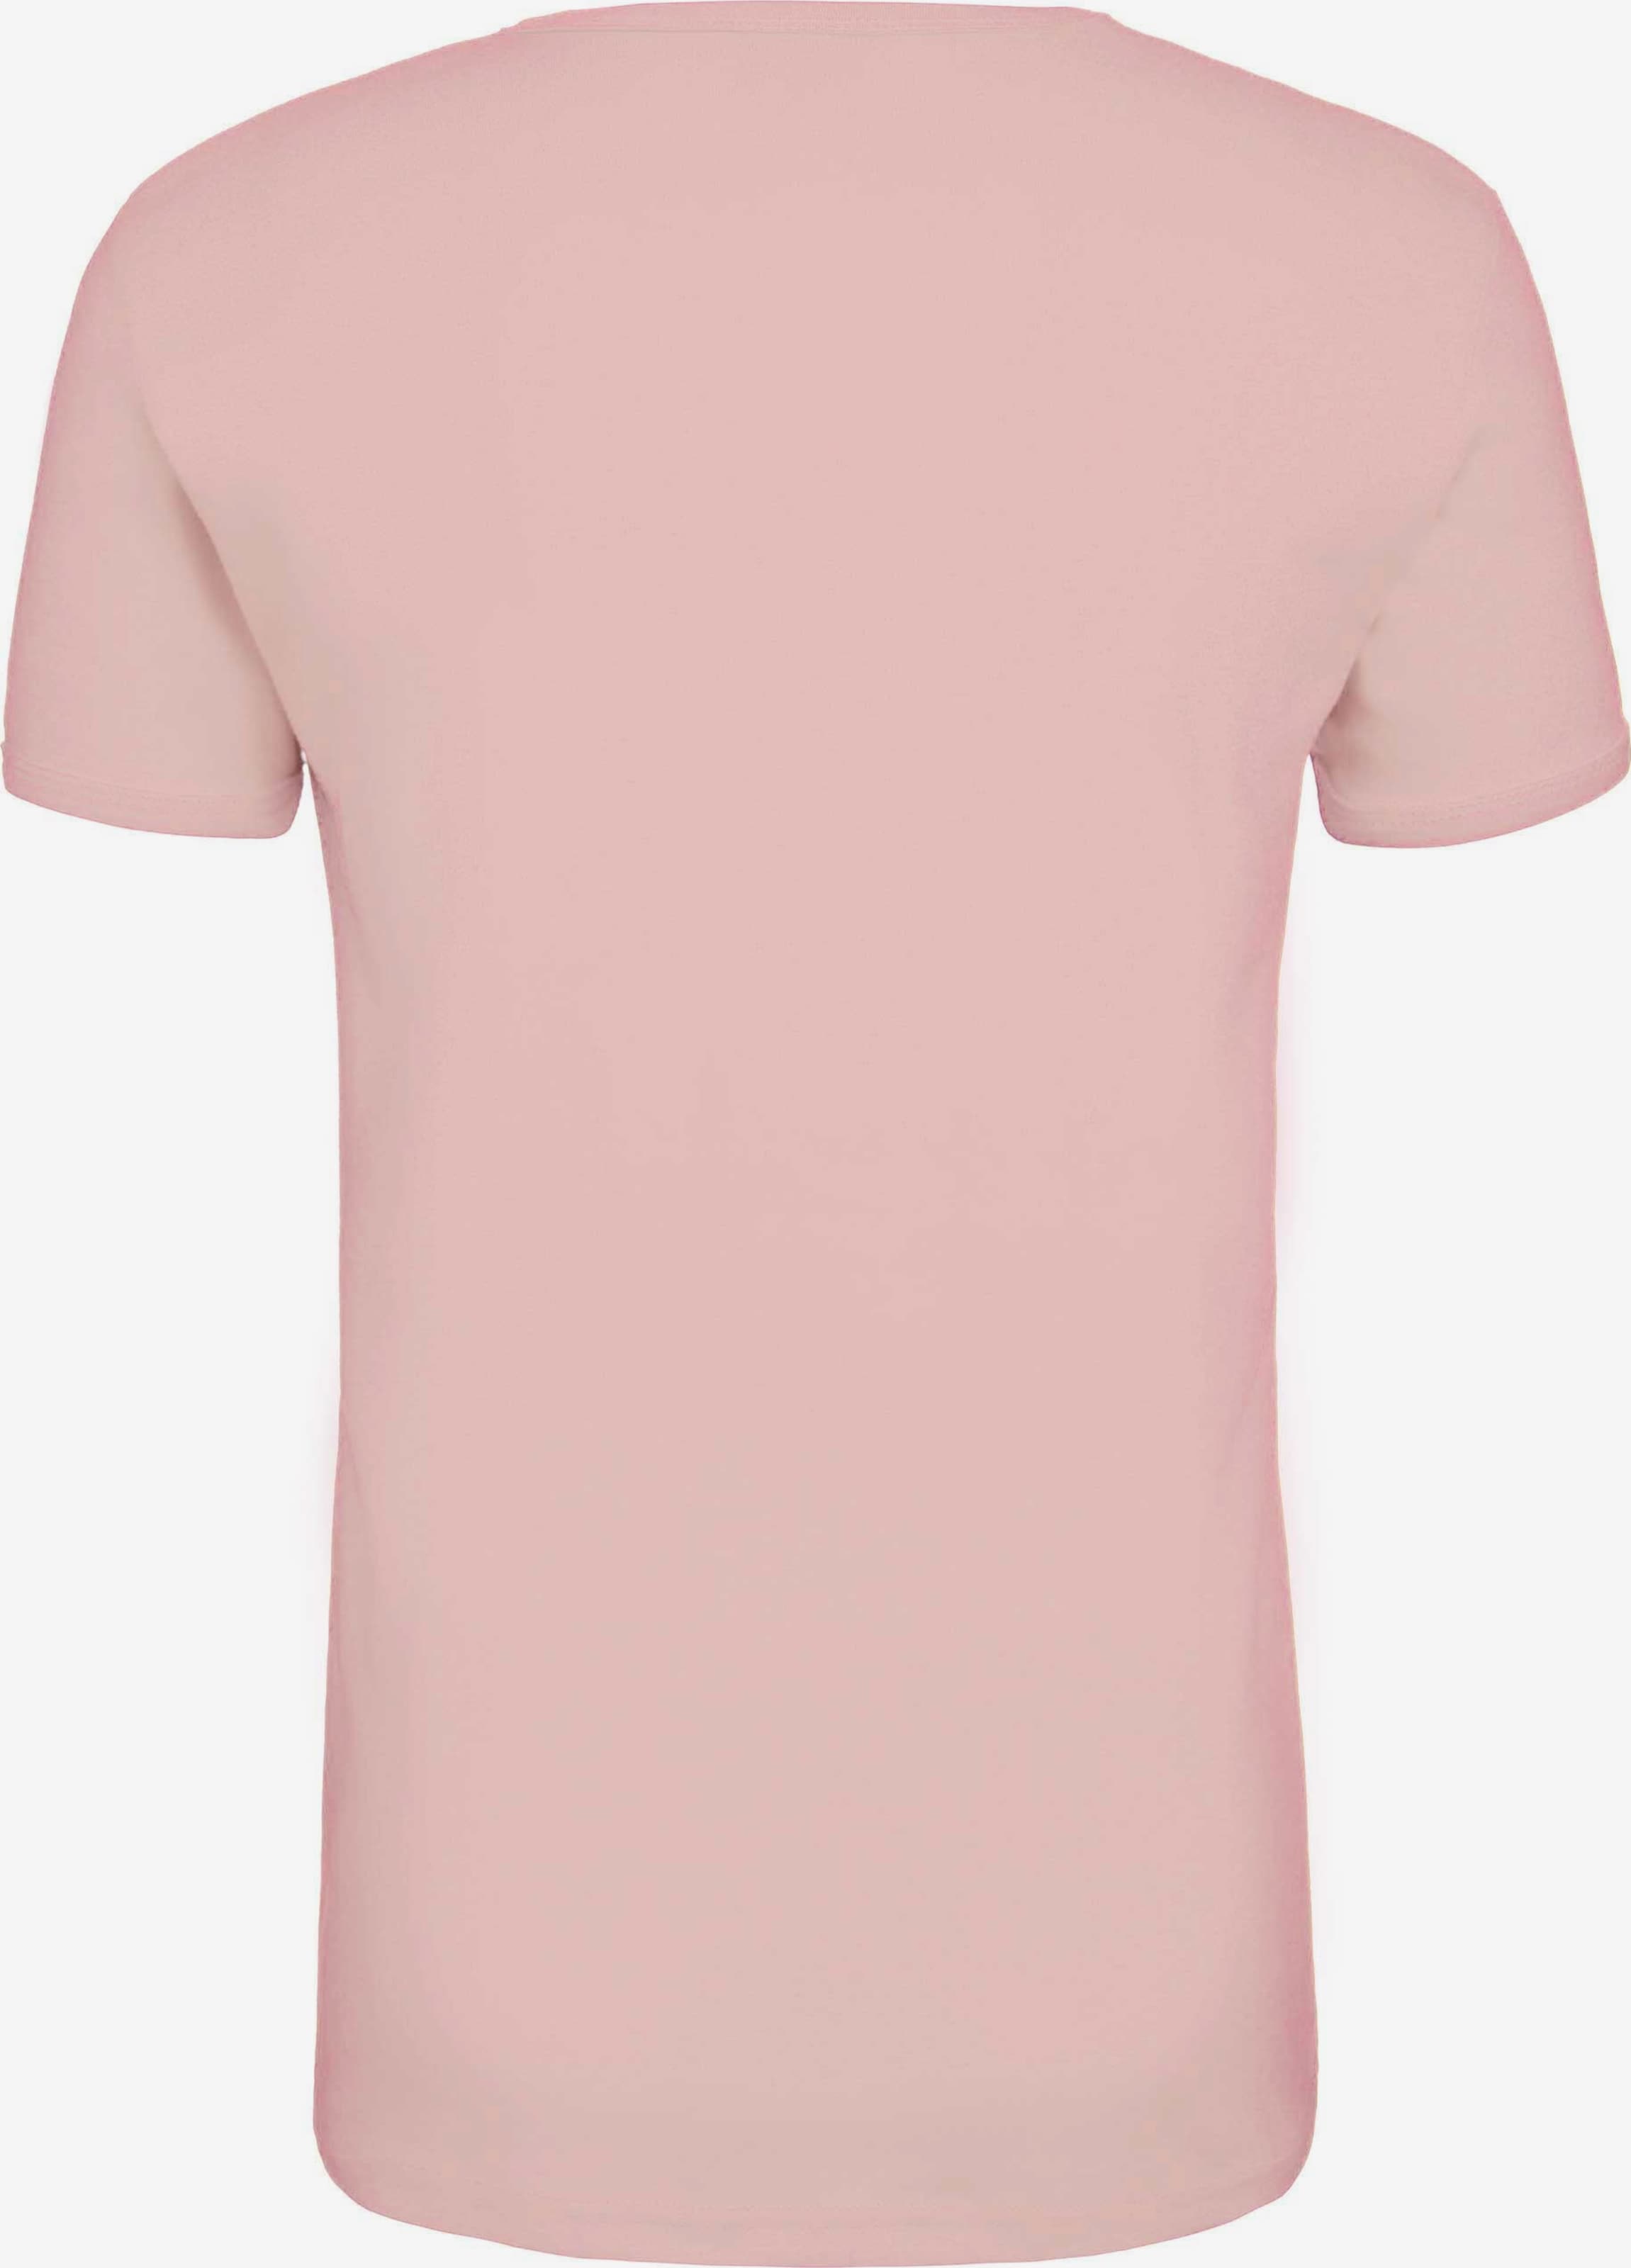 LOGOSHIRT Shirt Sendung der Maus\' \'Die YOU mit in | ABOUT Pink